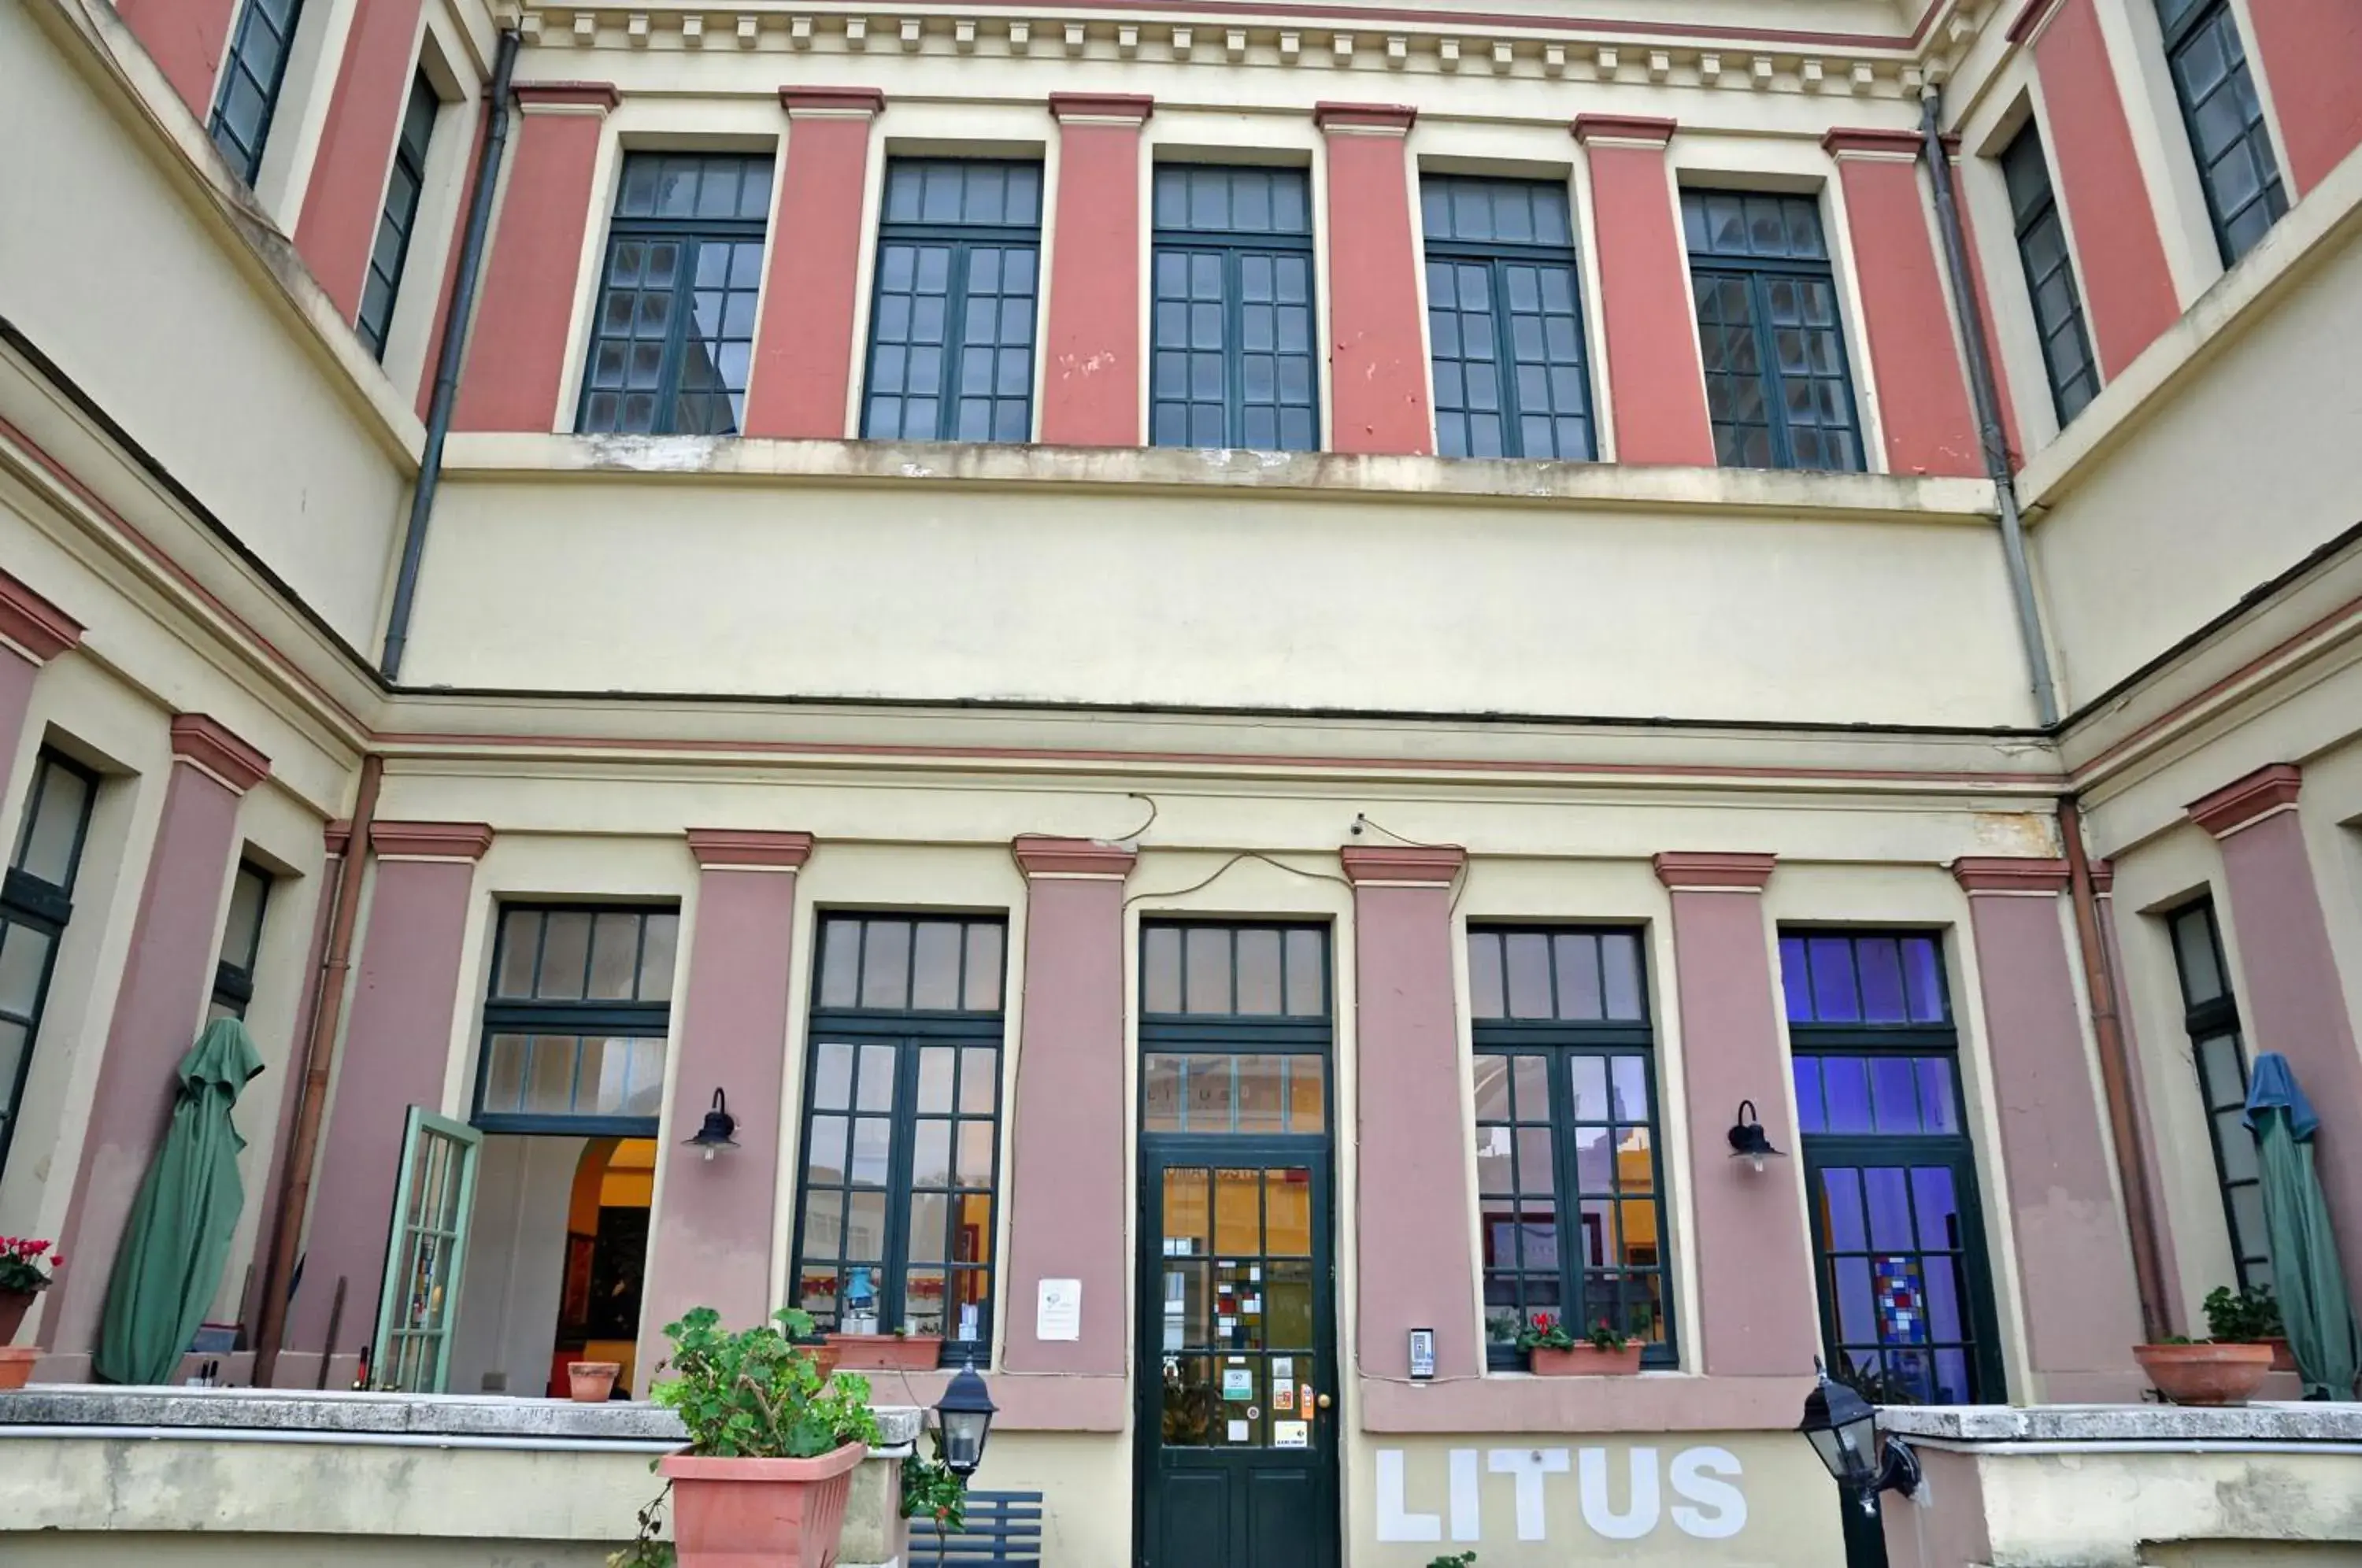 Facade/entrance, Property Building in Litus Roma Hostel